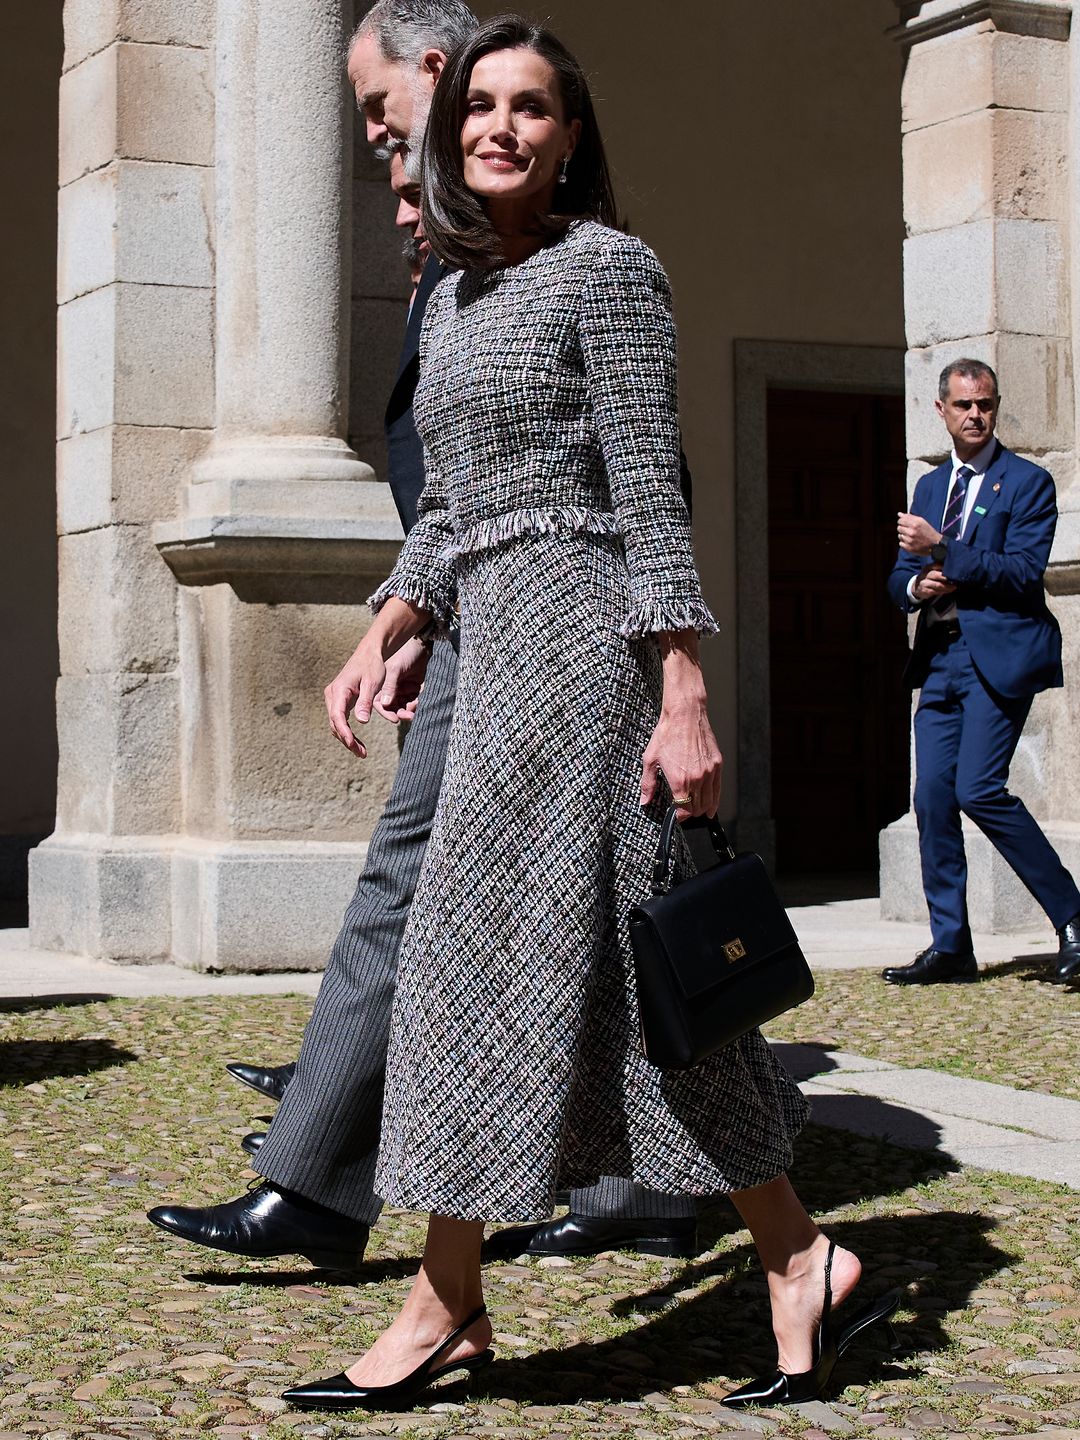 Queen Letizia of Spain wears a tweed dress while in Spain